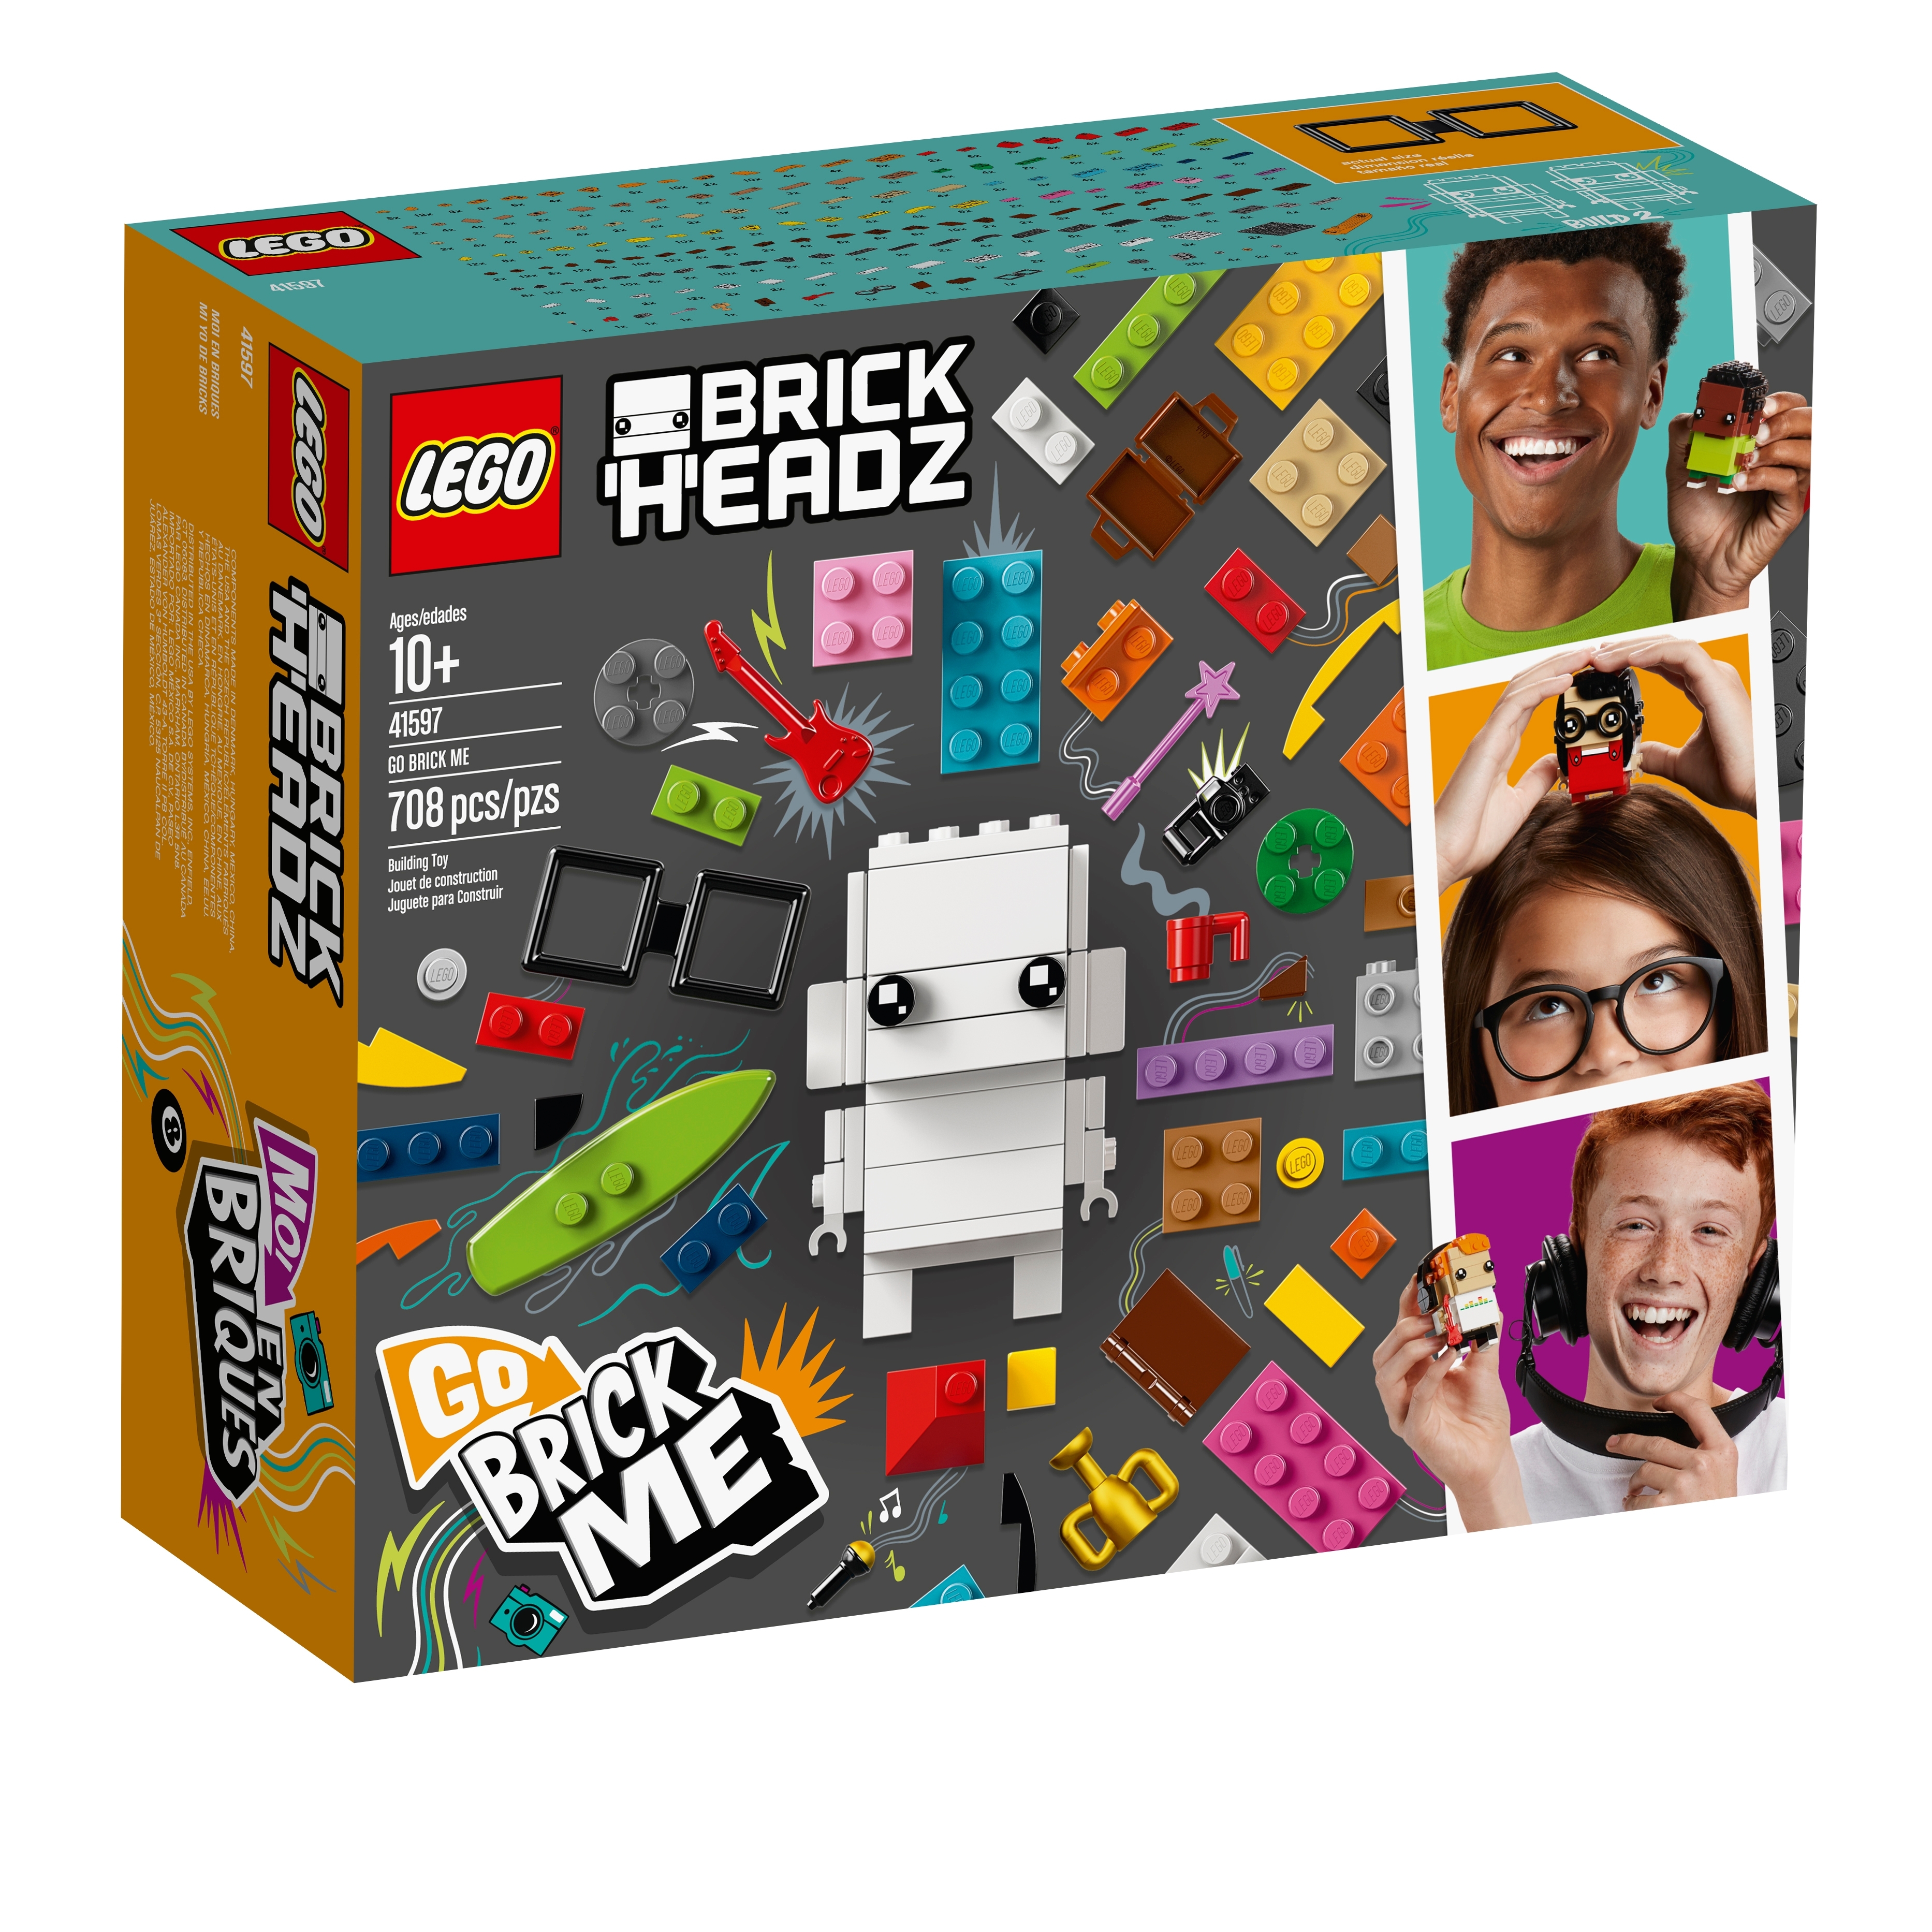 Go 41597 BrickHeadz | online at the Official LEGO® Shop US